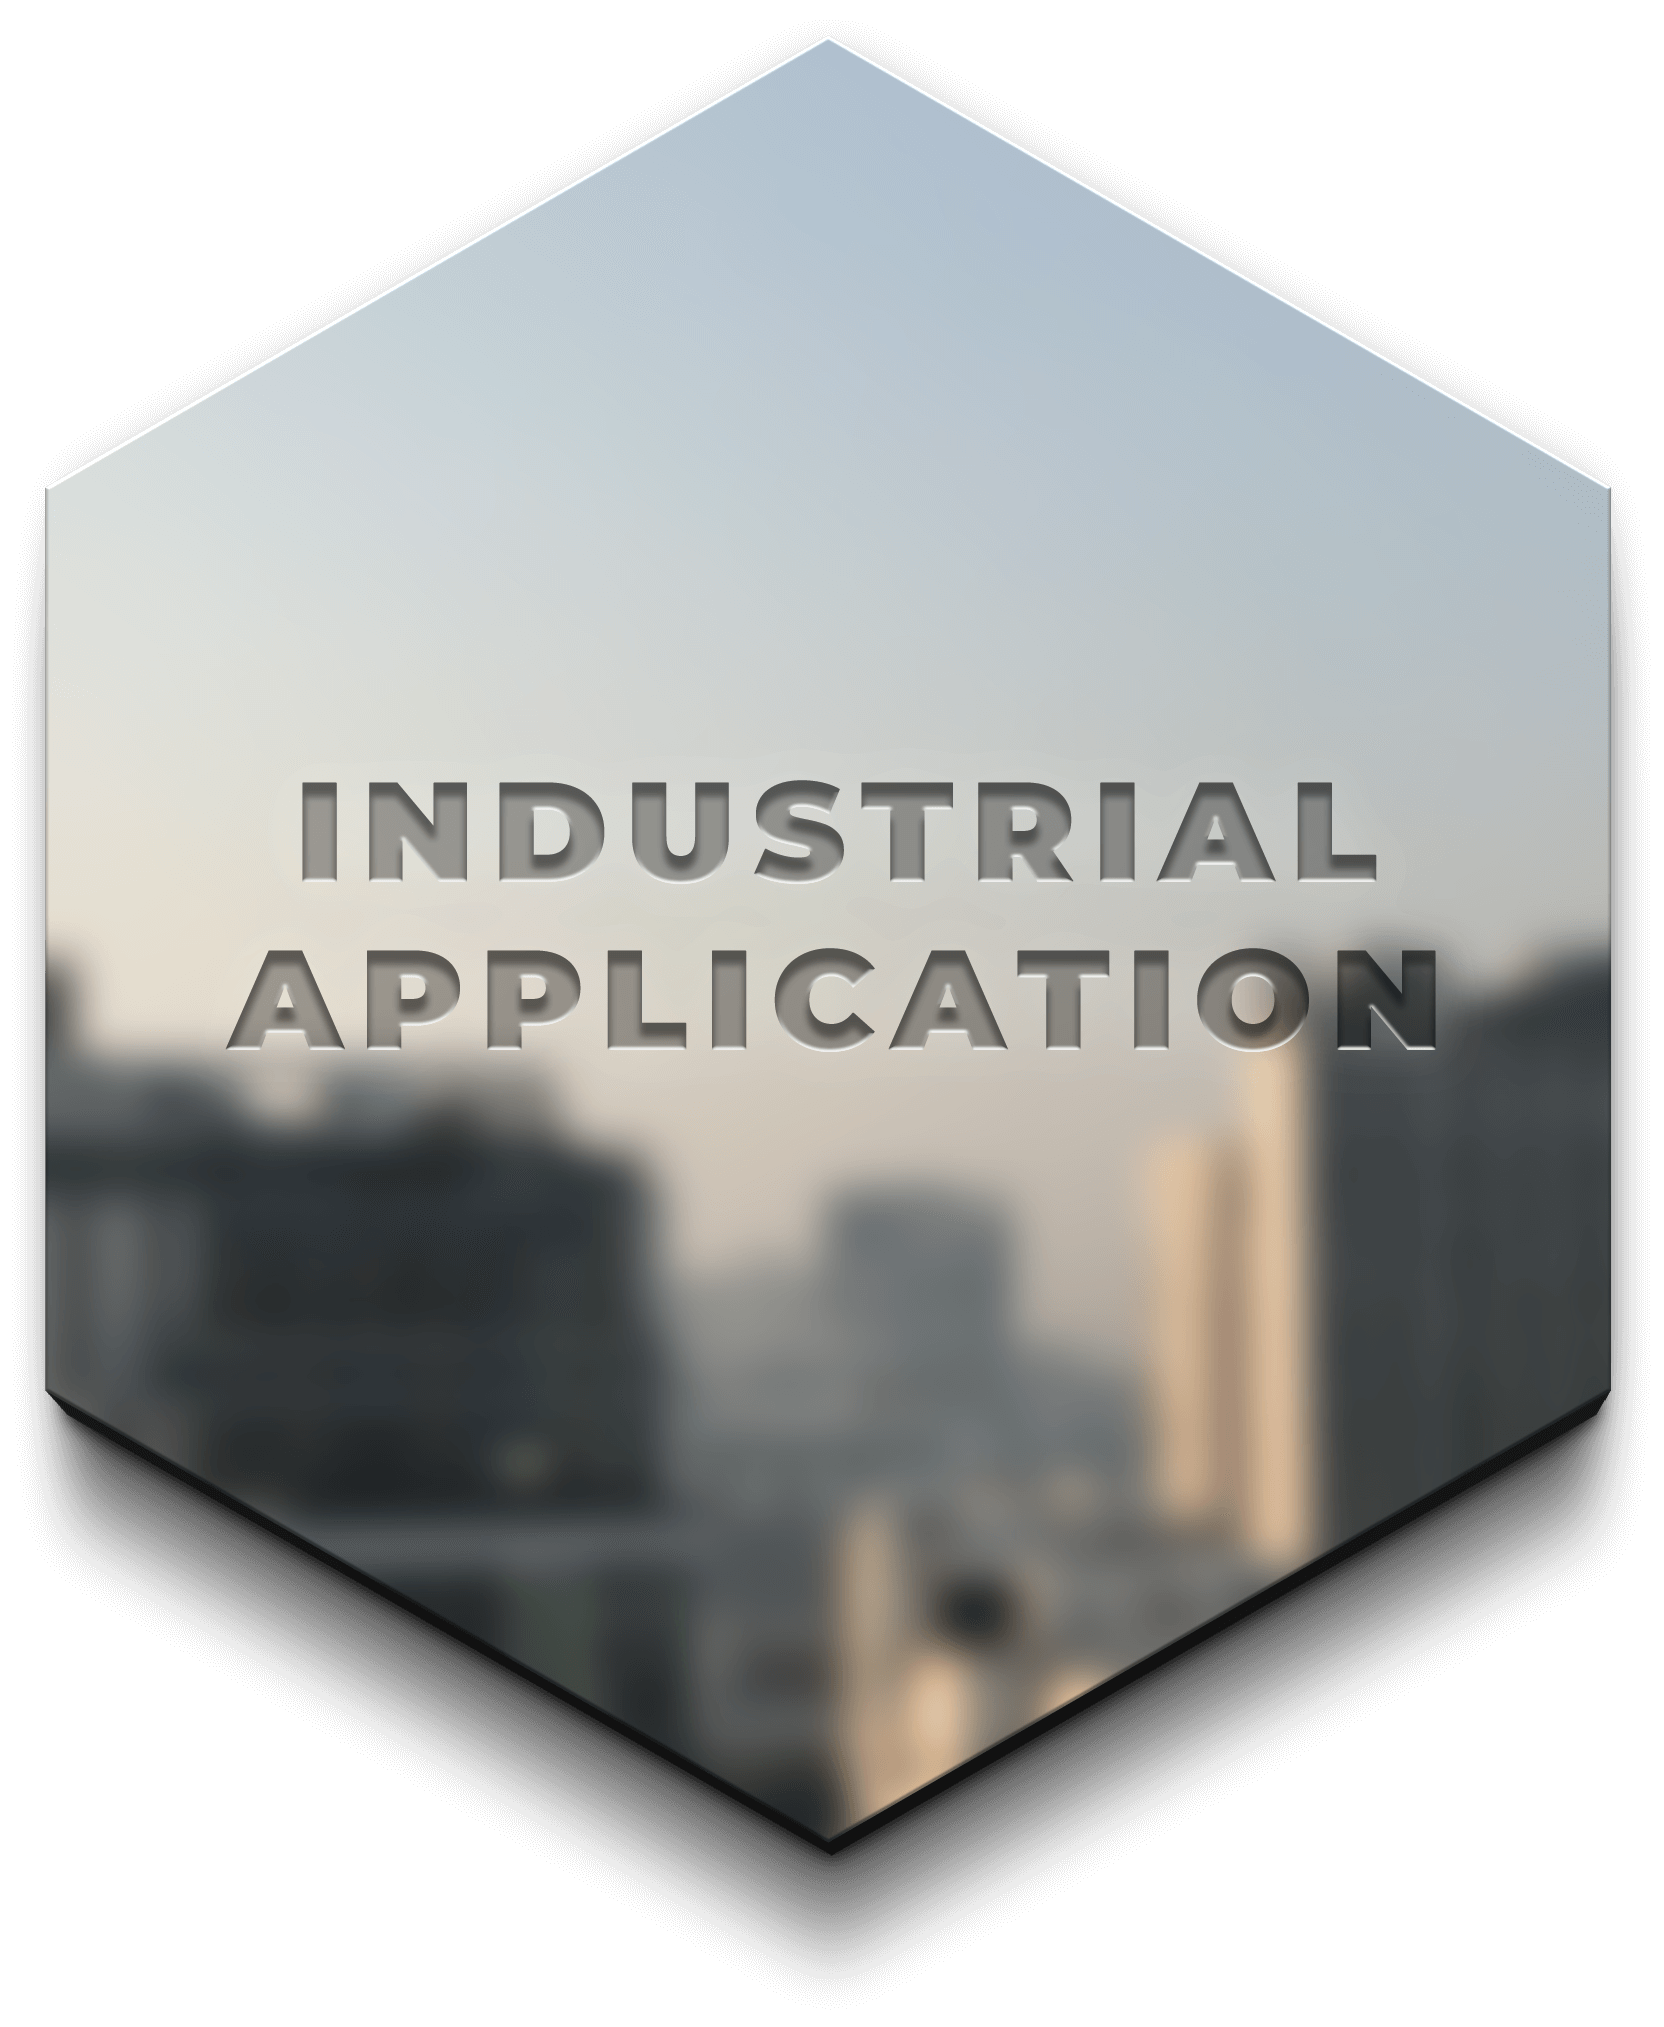 Industrial application